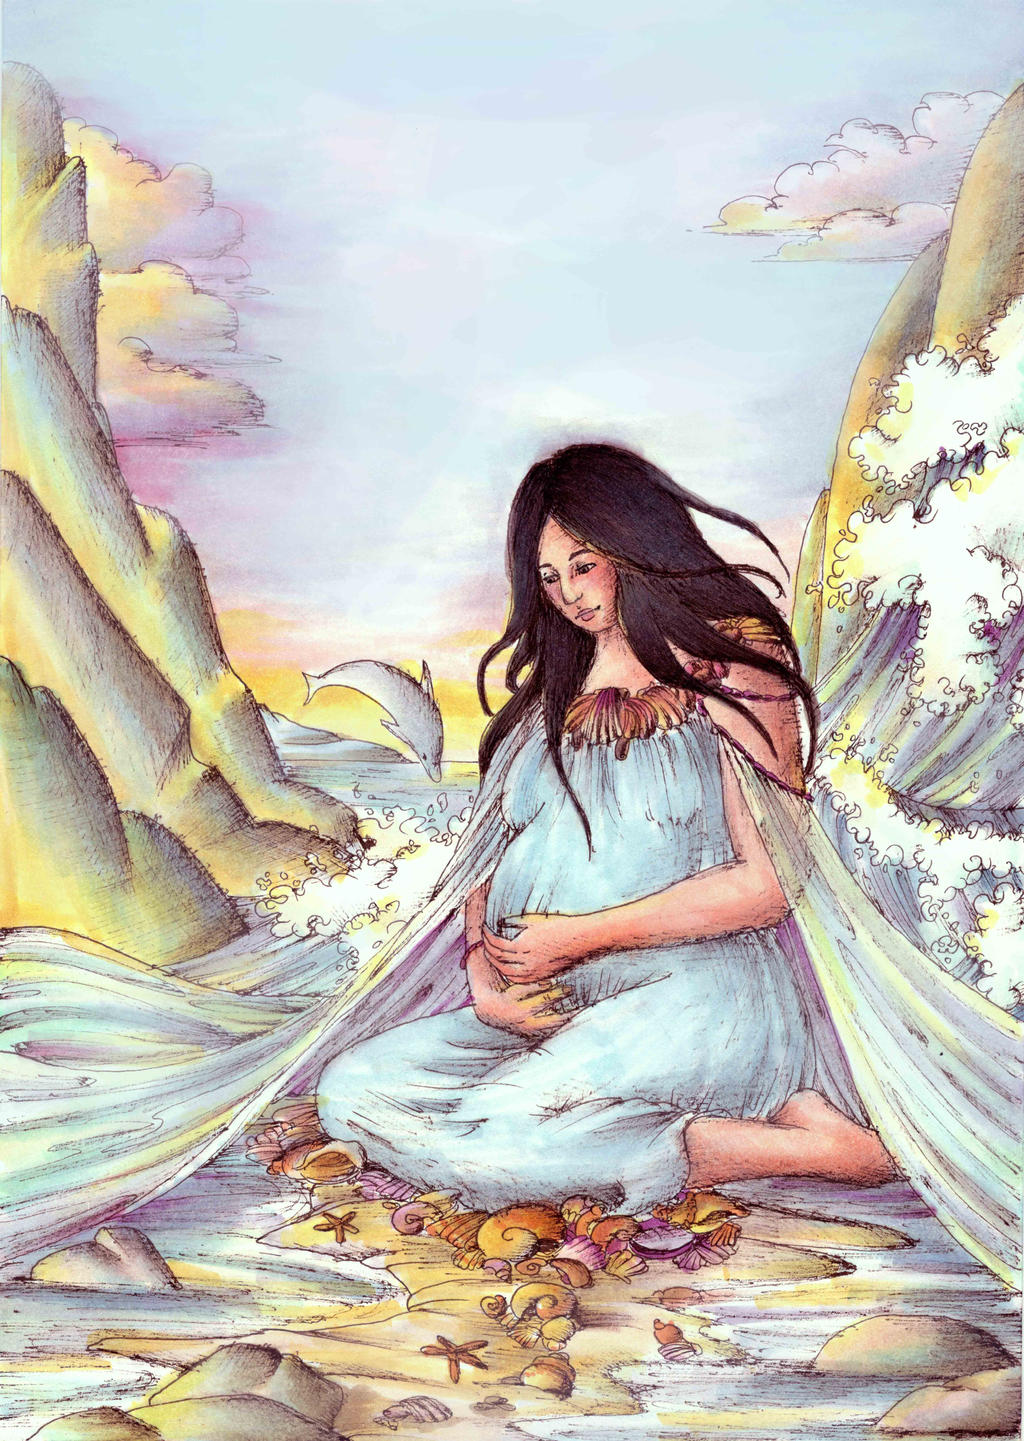 Sea goddess by AncaXBre on DeviantArt